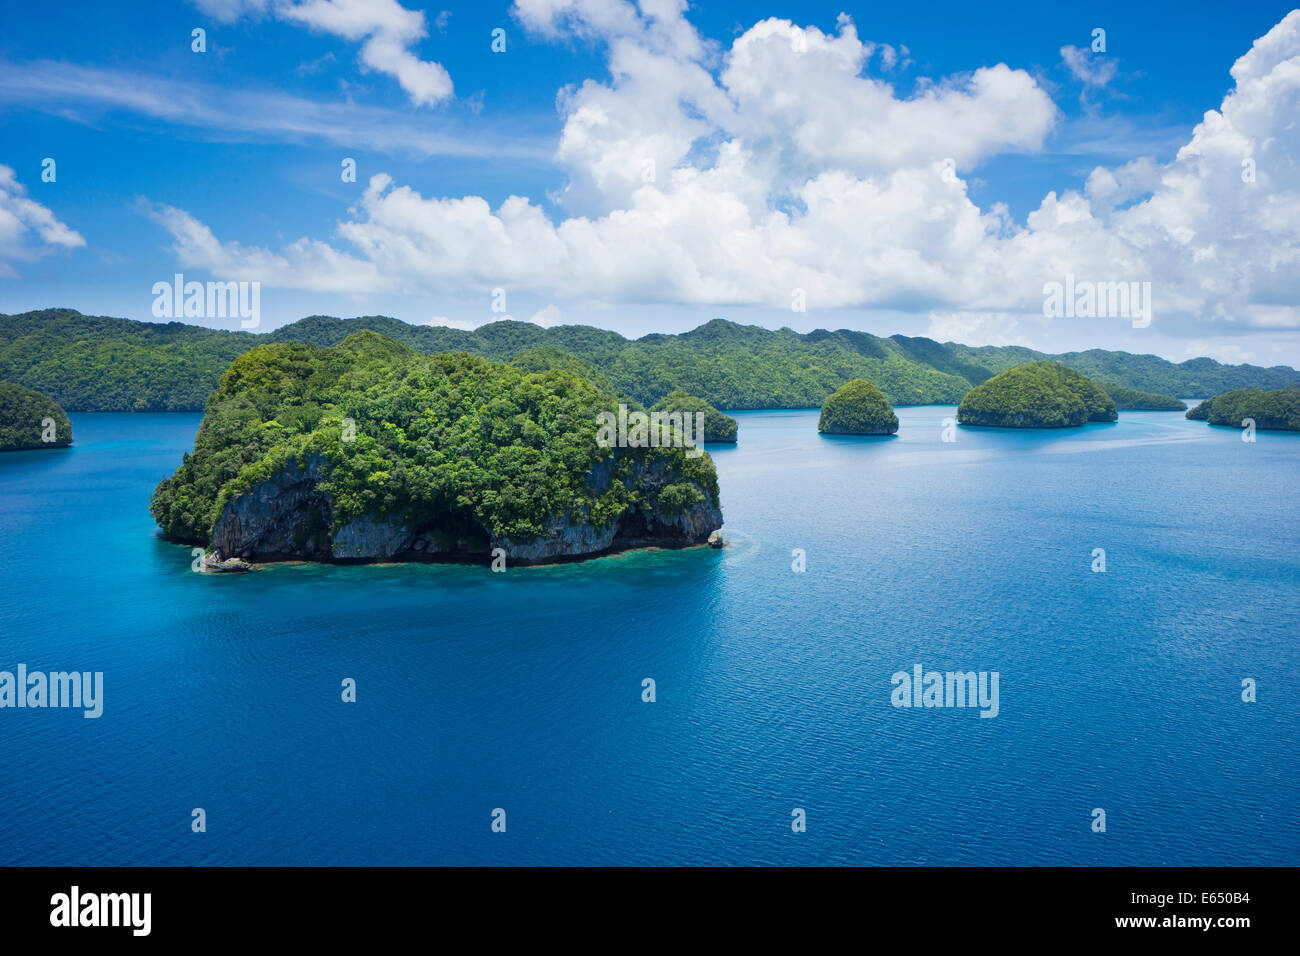 Islands in the island paradise of Palau, Micronesia Stock Photo